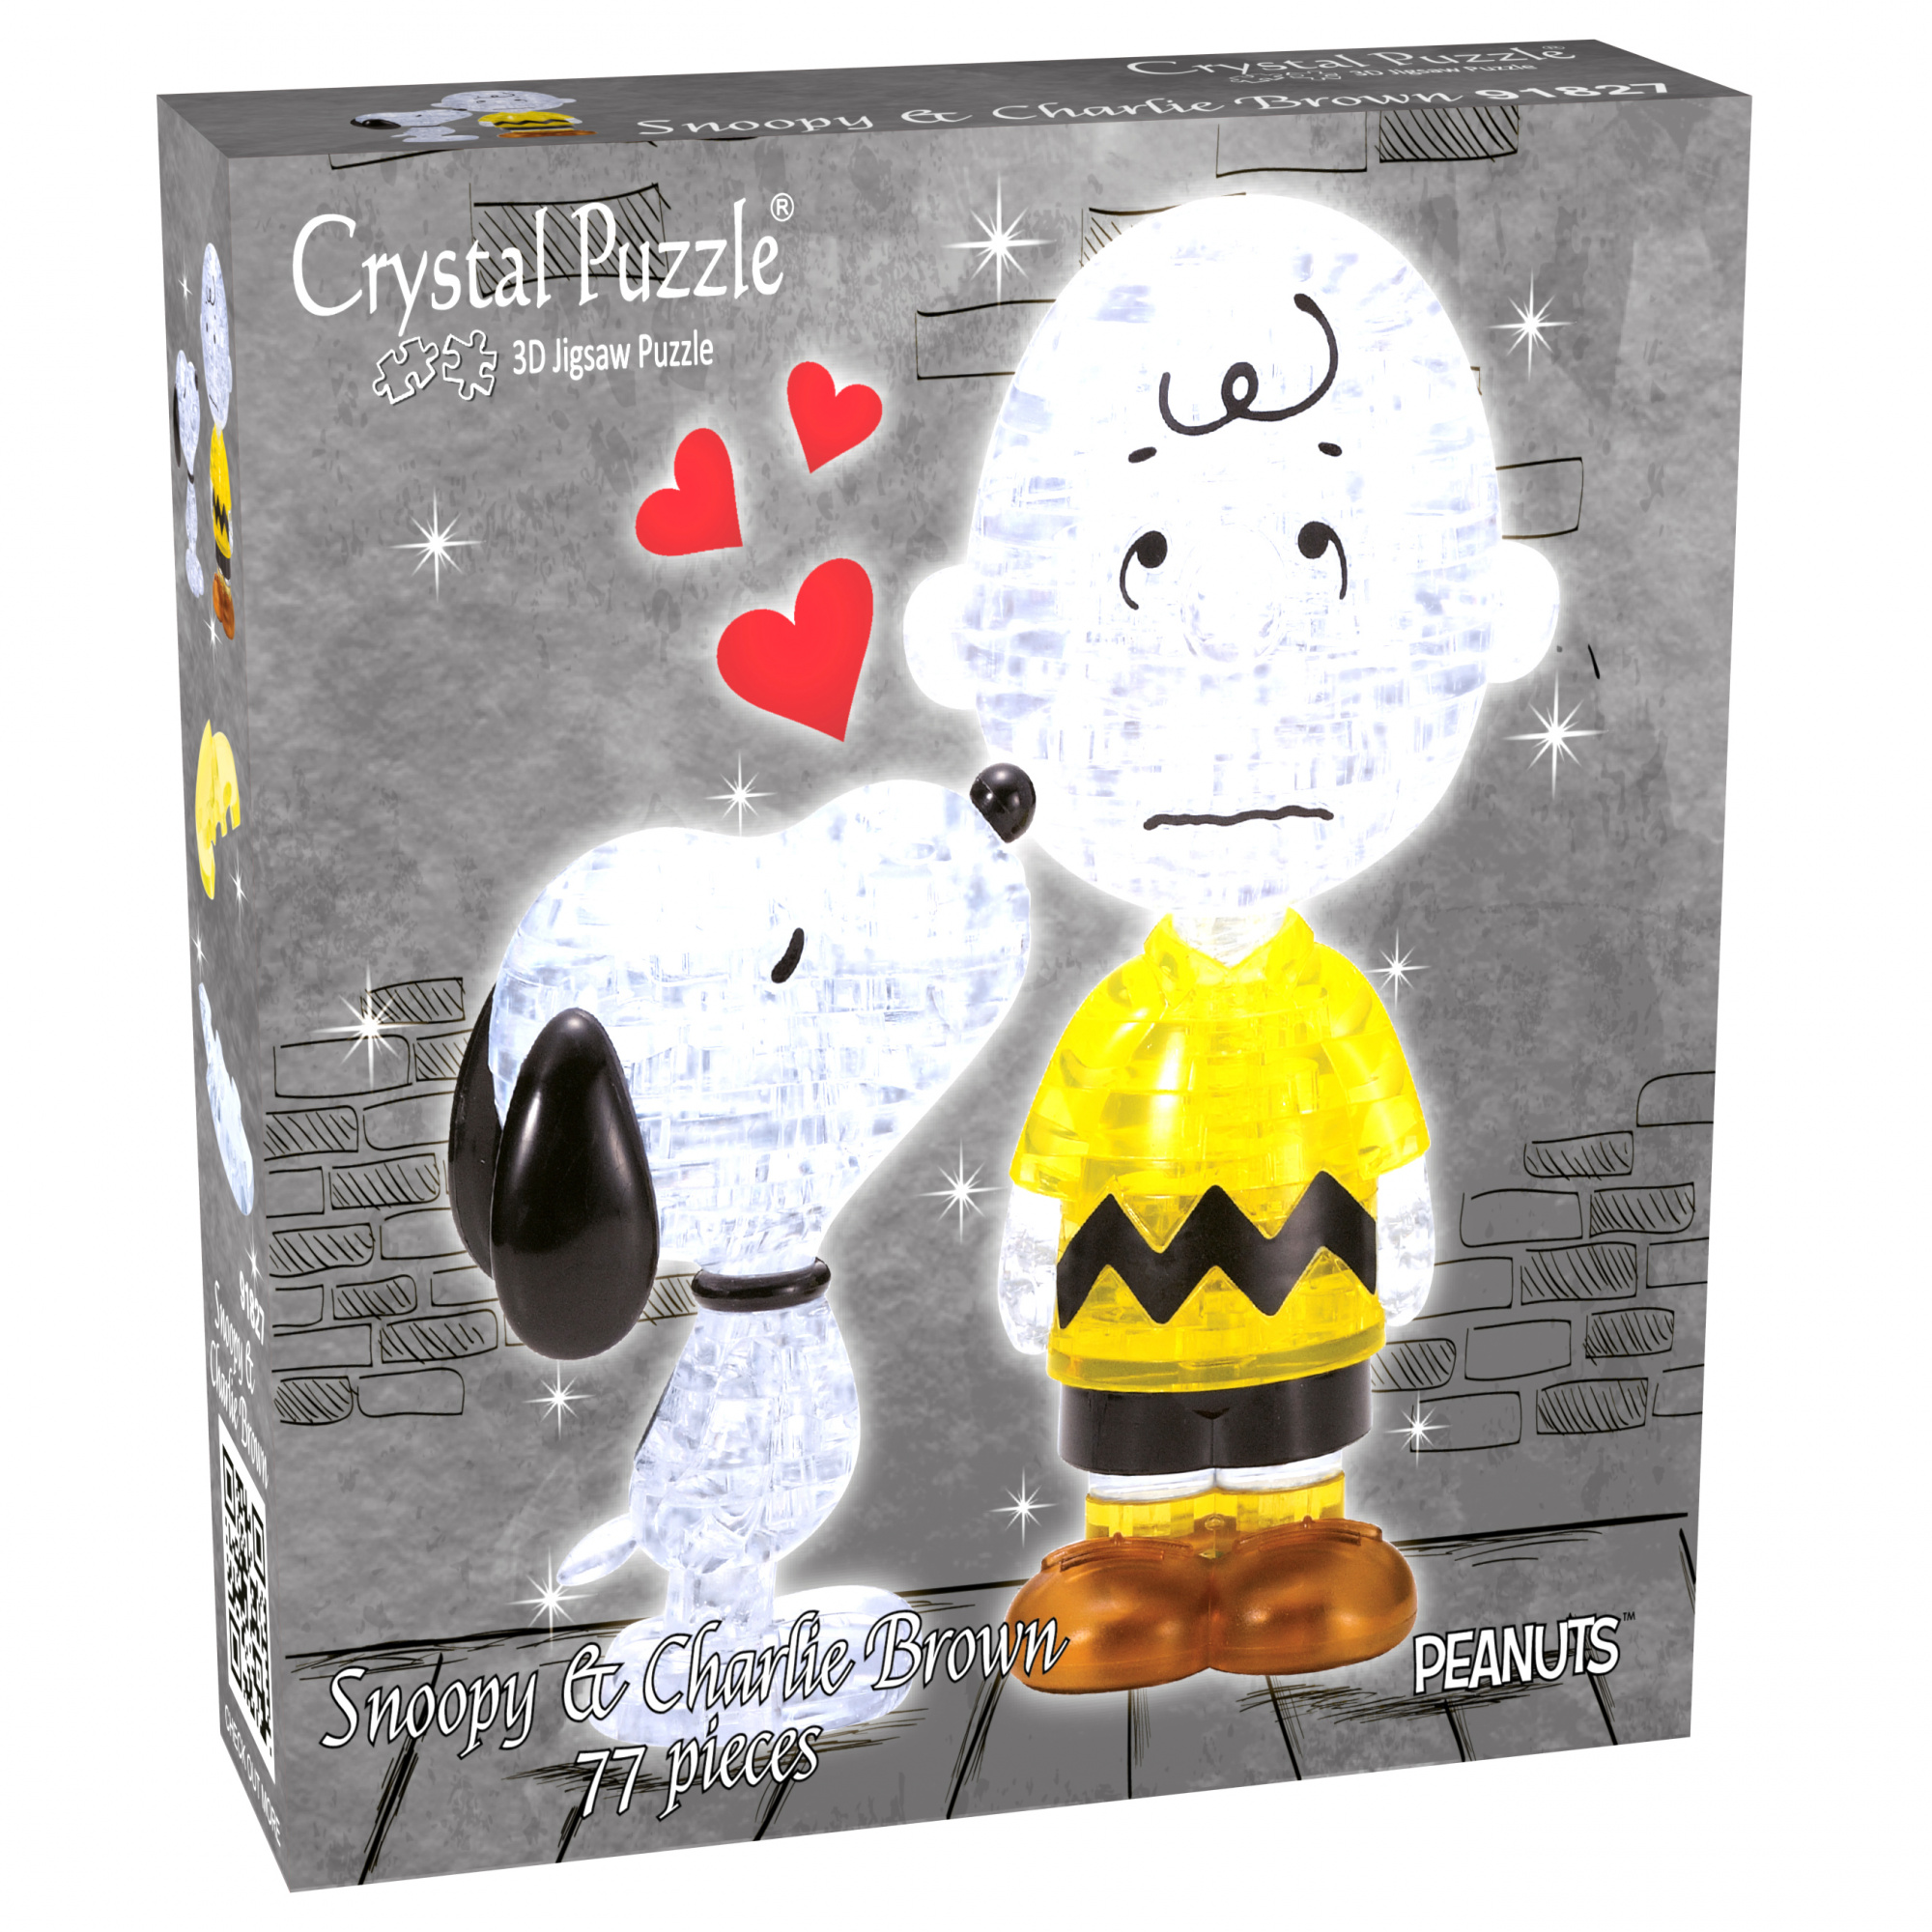 2 Crystal Puzzle 3 D Puzzle verschiedene Motive Erde Snoopy Garfield Auswahl Nr 